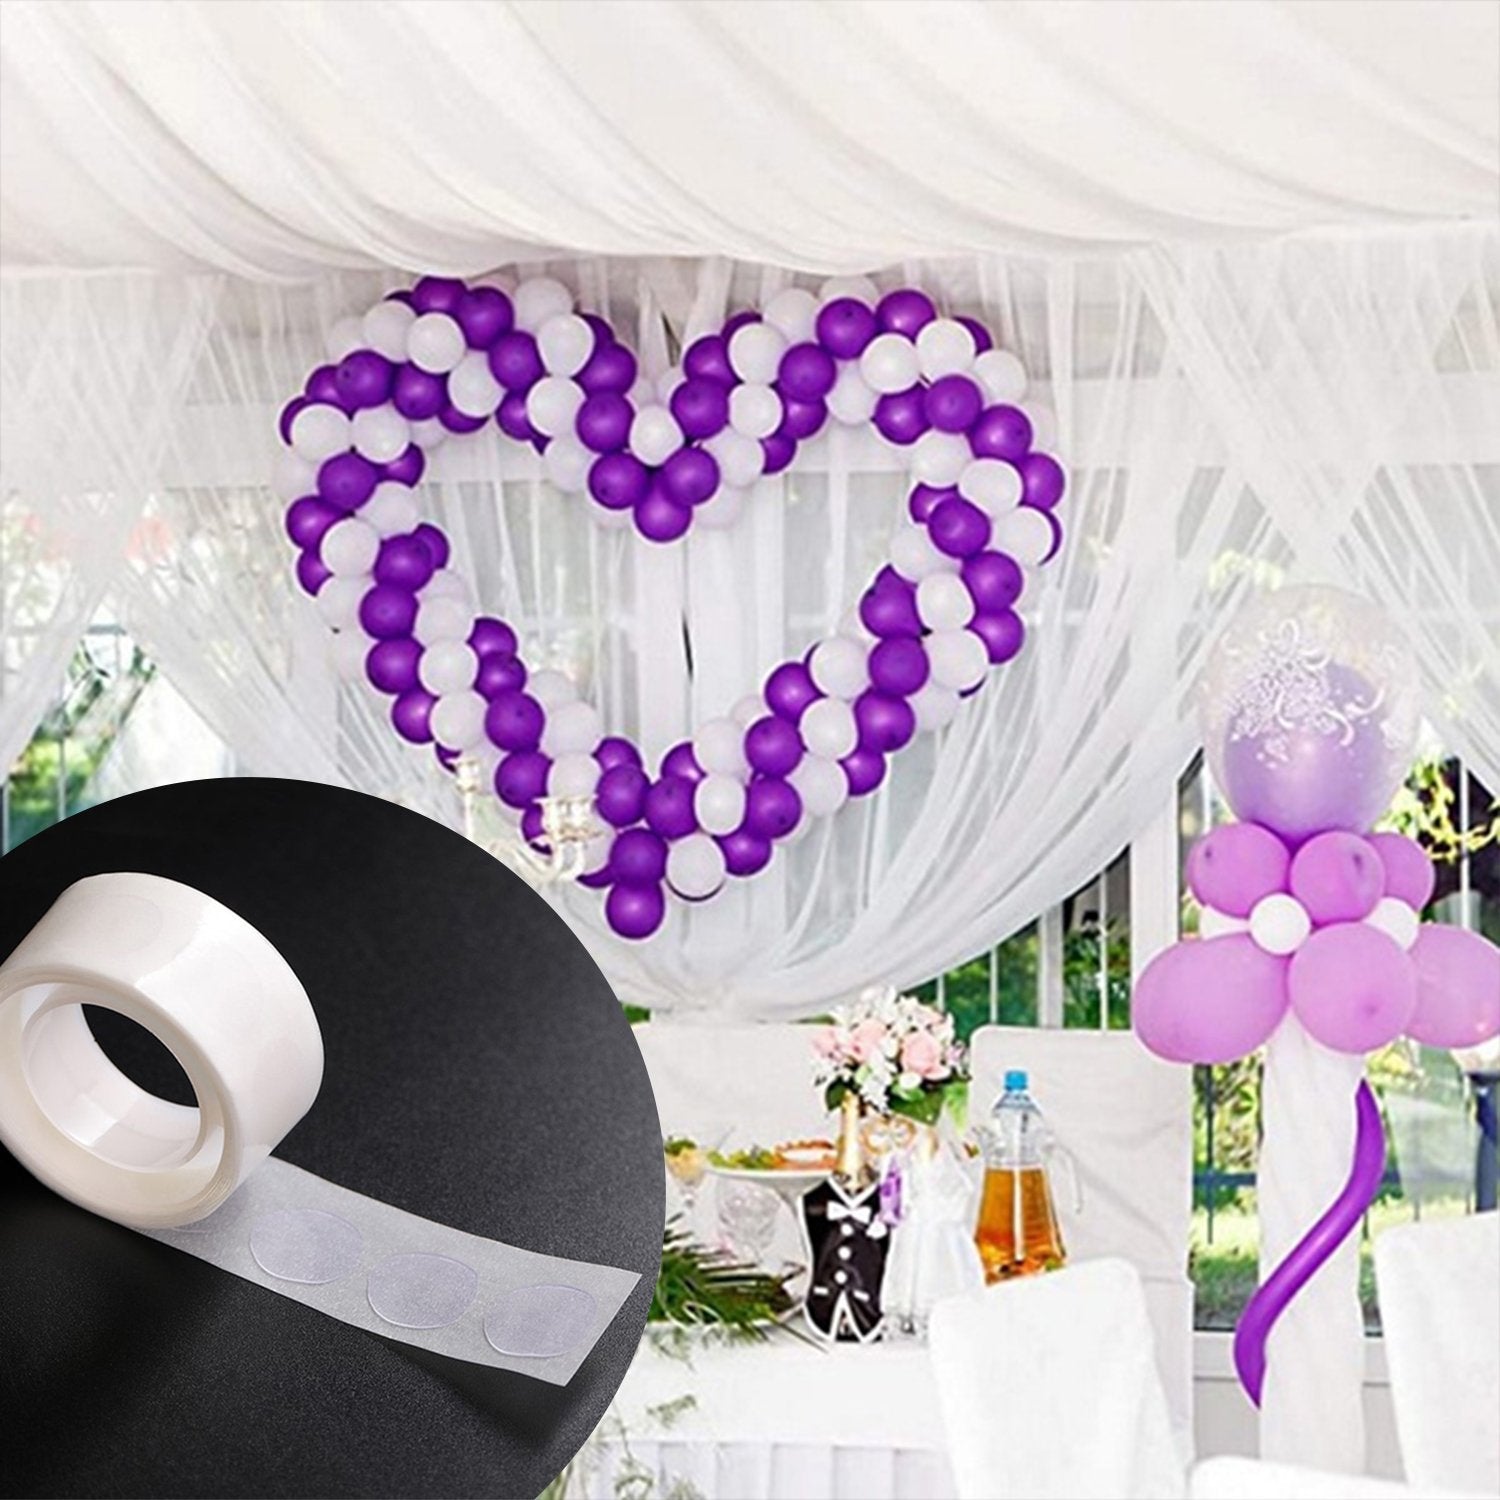 4694 Glue Dots for Happy Birthday, Wedding, Anniversary, Baby Shower Decoration